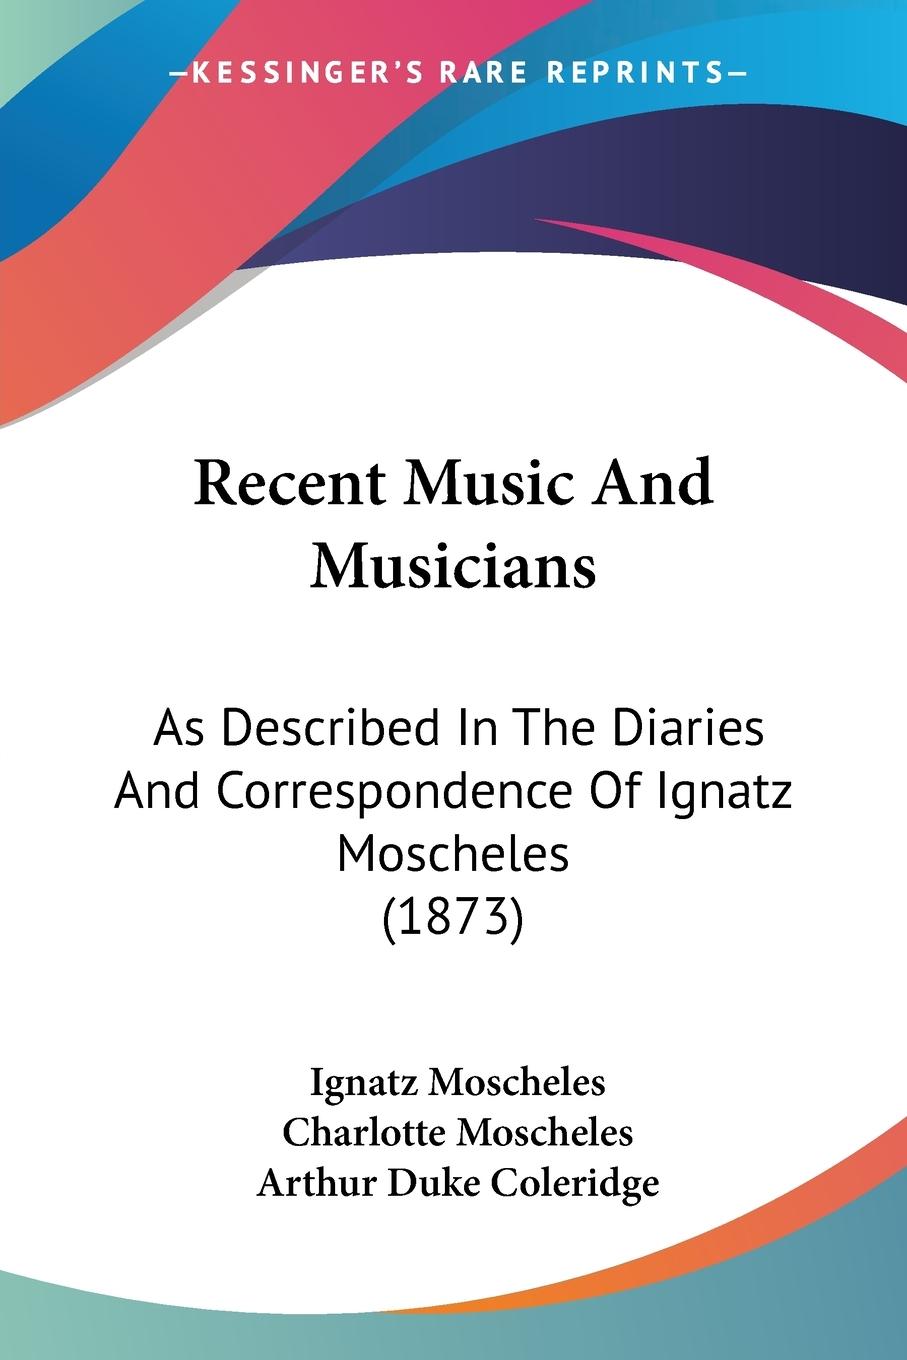 Recent Music And Musicians - Moscheles, Ignatz Moscheles, Charlotte